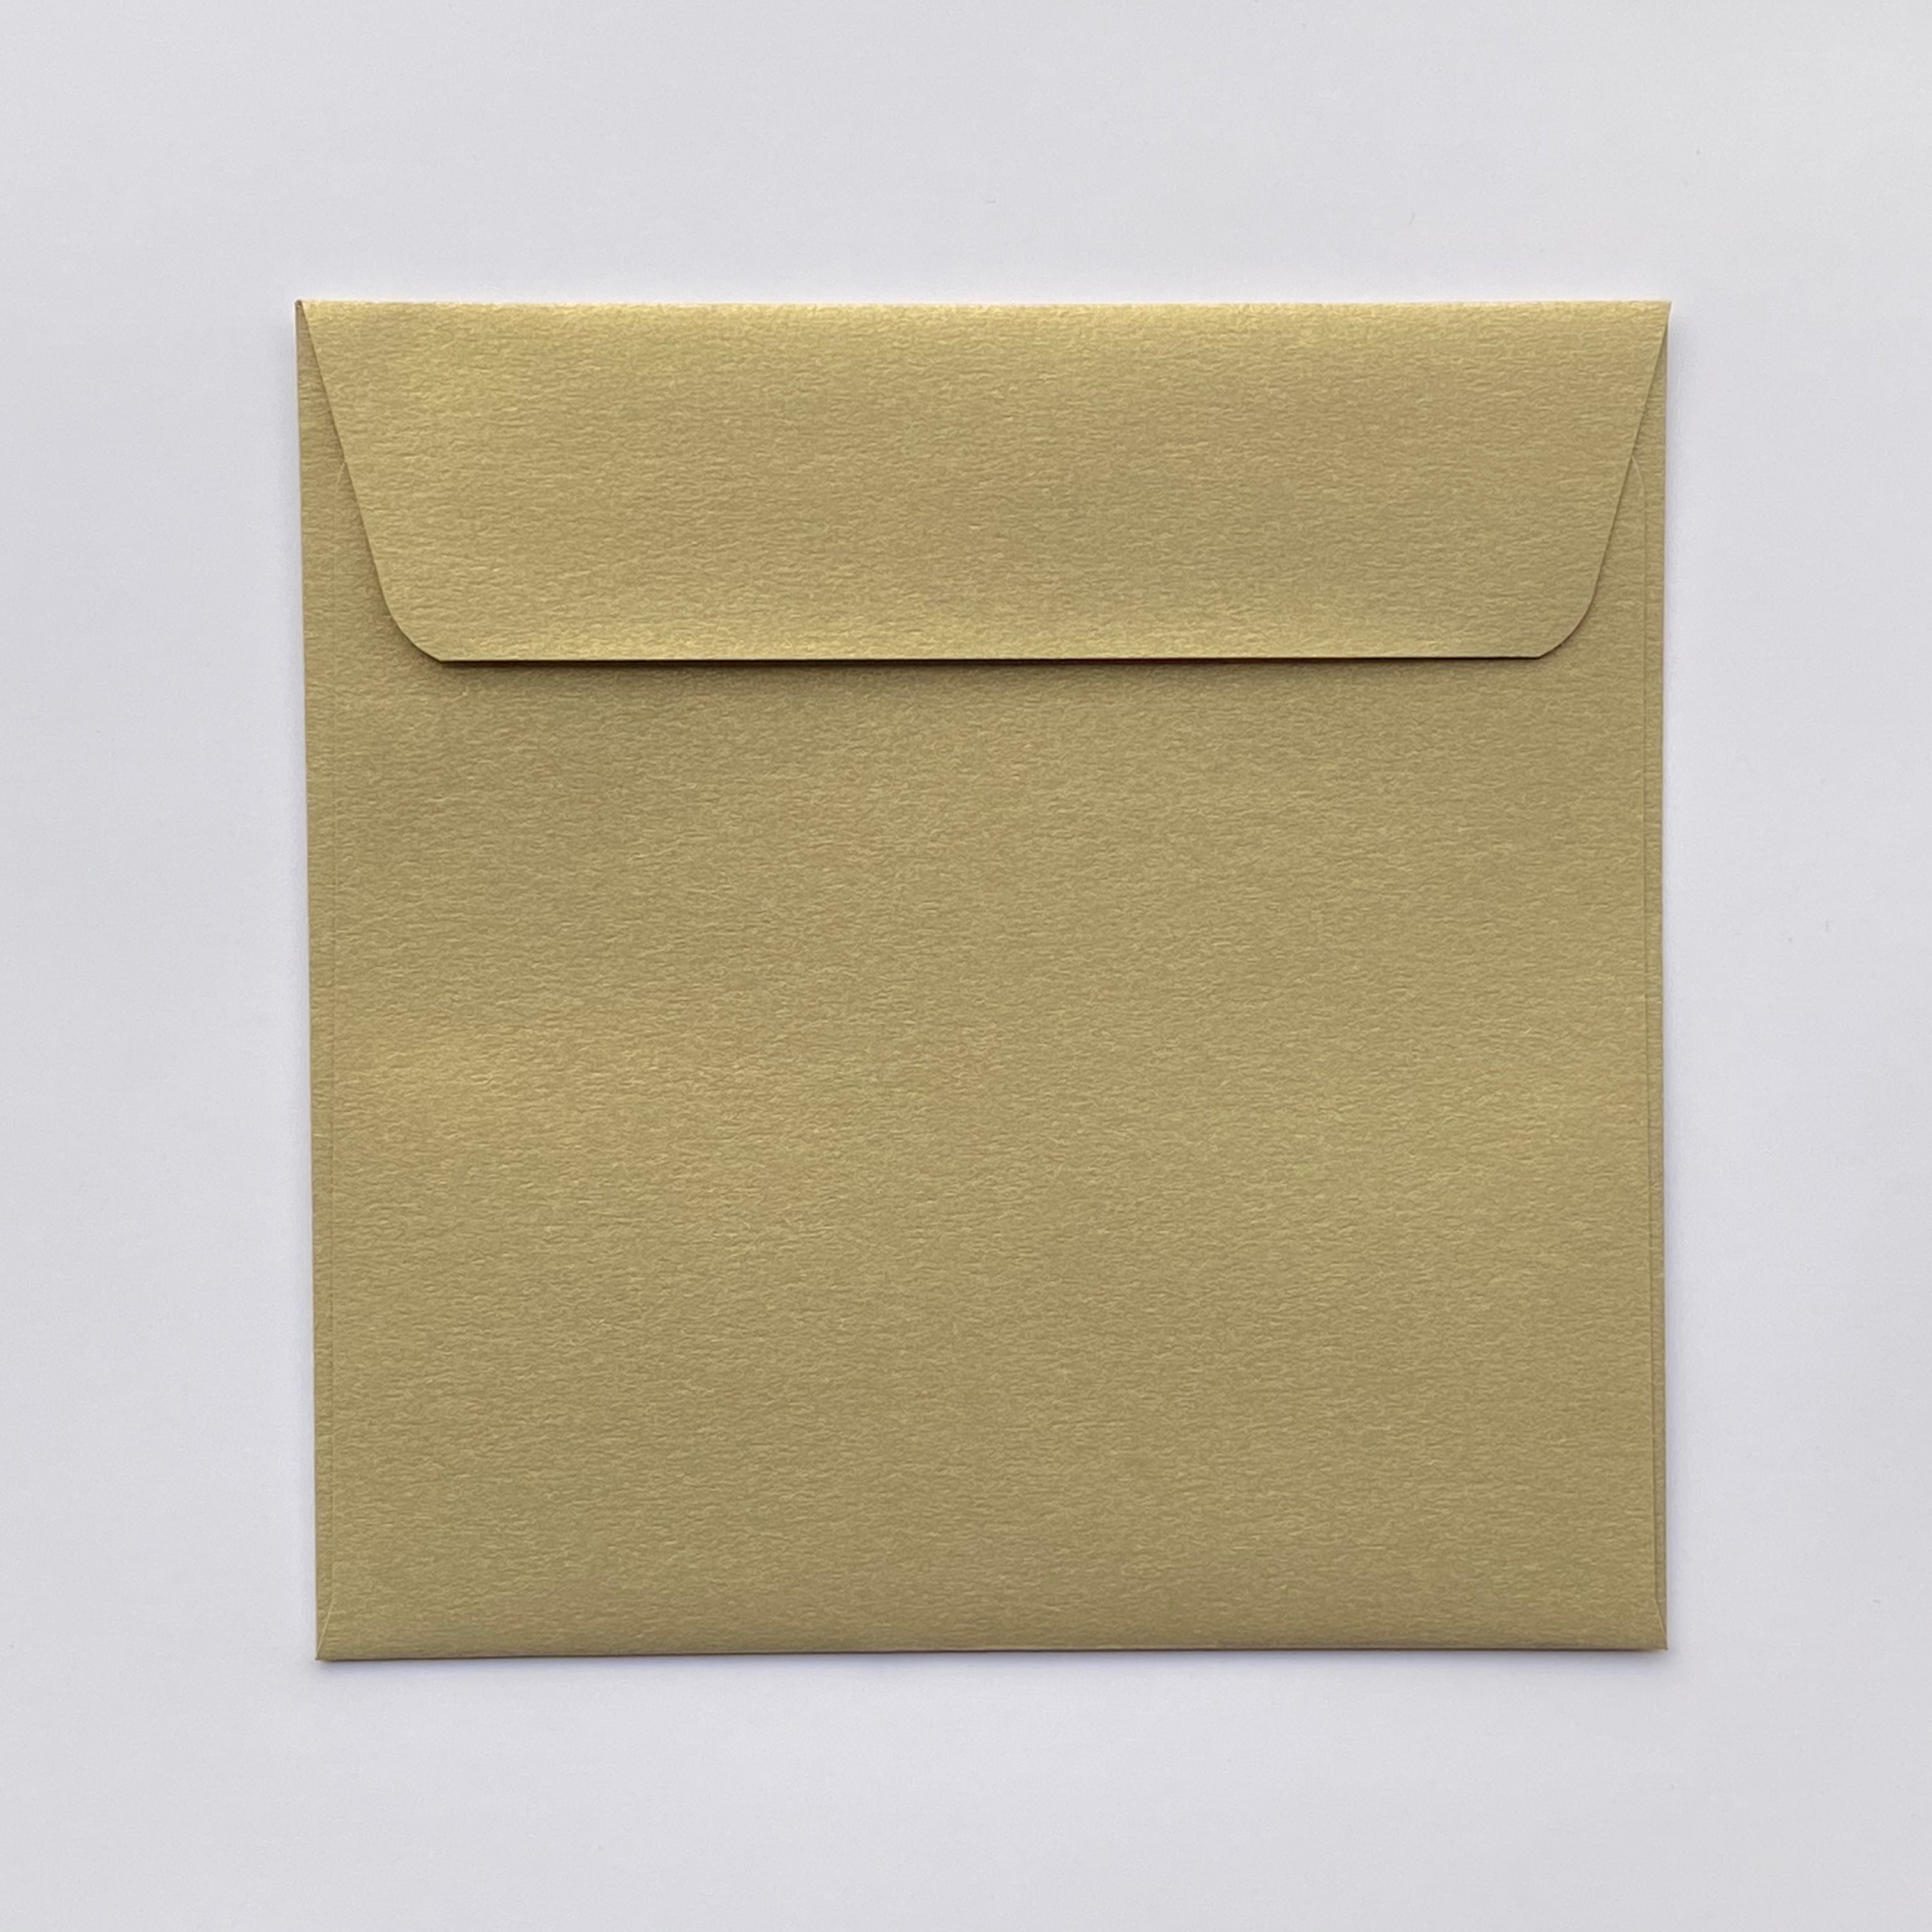 100mm square metallic envelopes